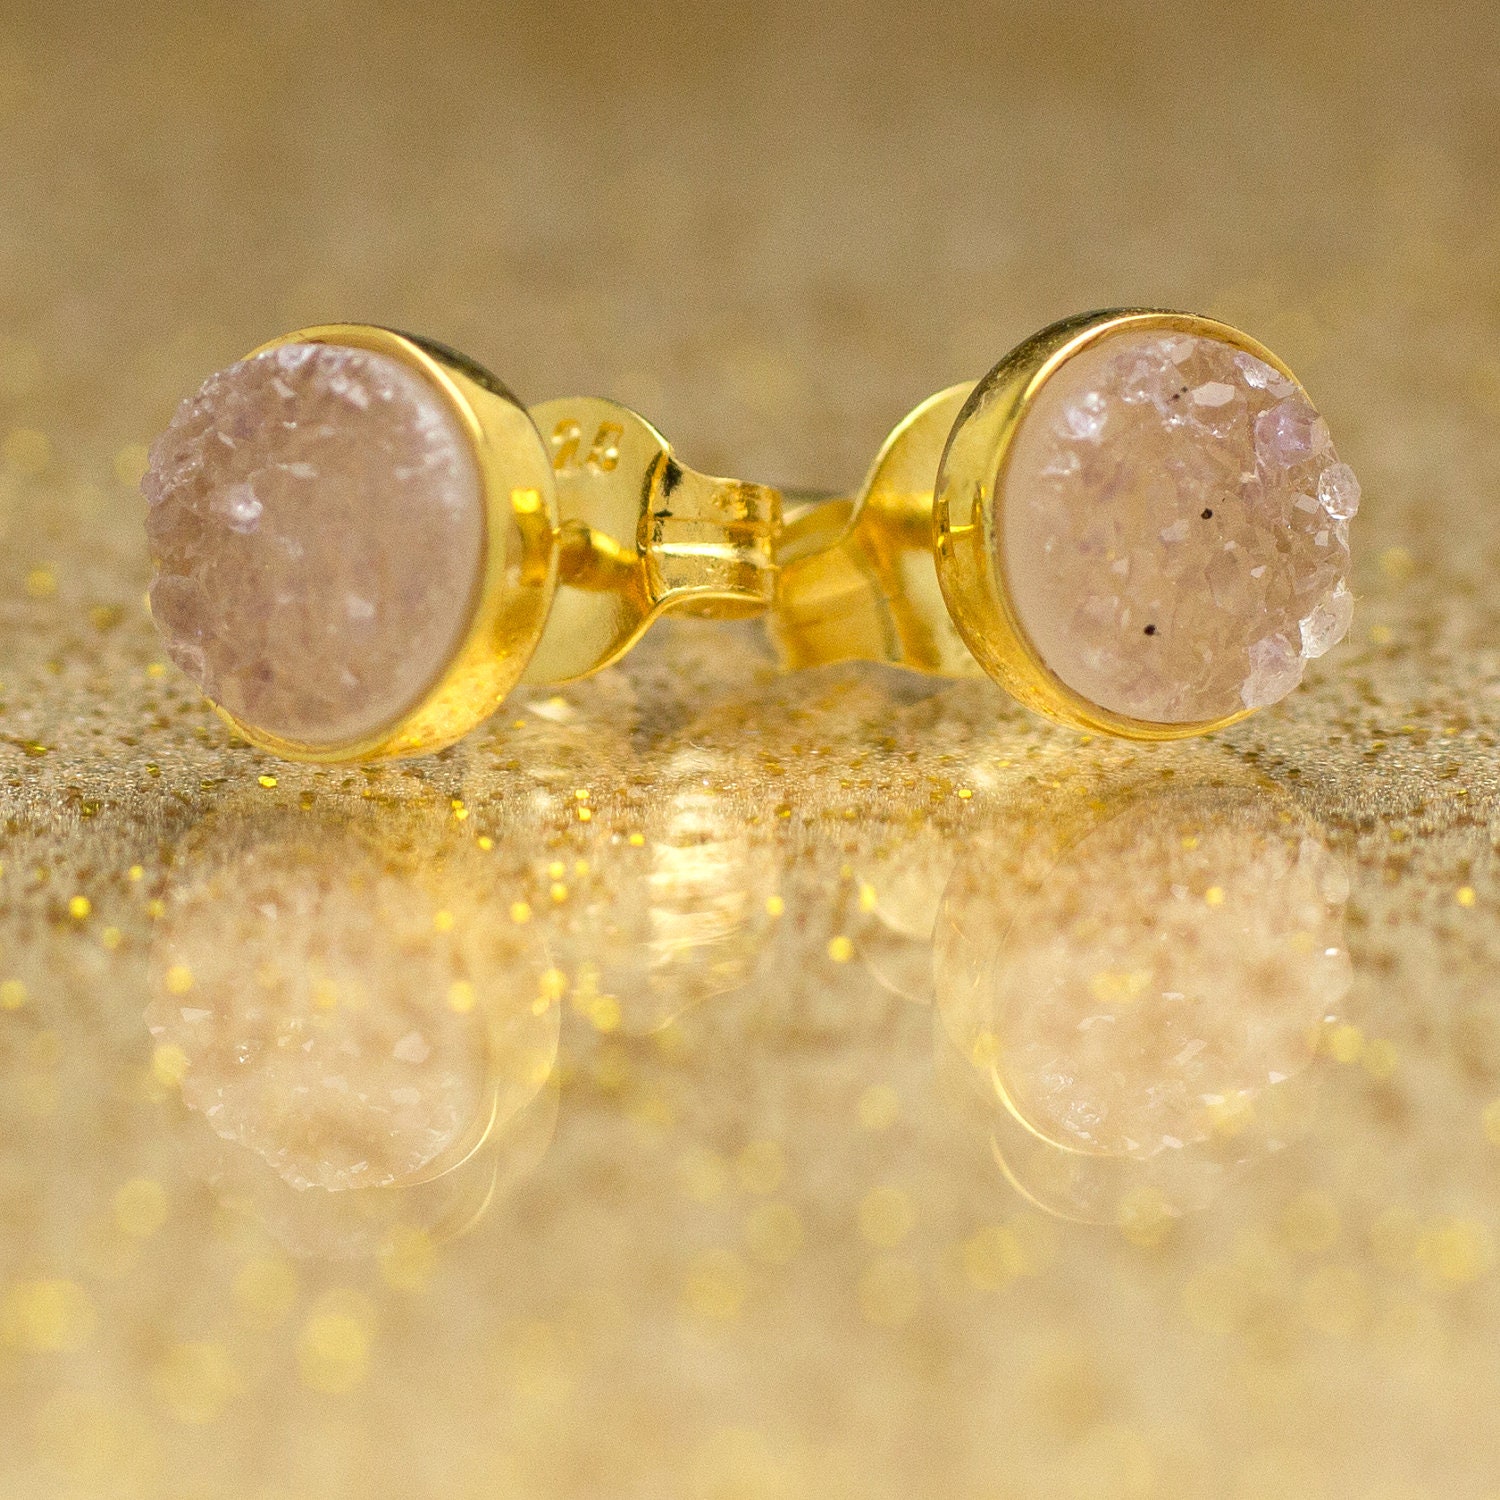 Drusy Quartz Stud Earrings - 24k Gold Vermeil - 6mm Round - Light Pink Drusy Quartz